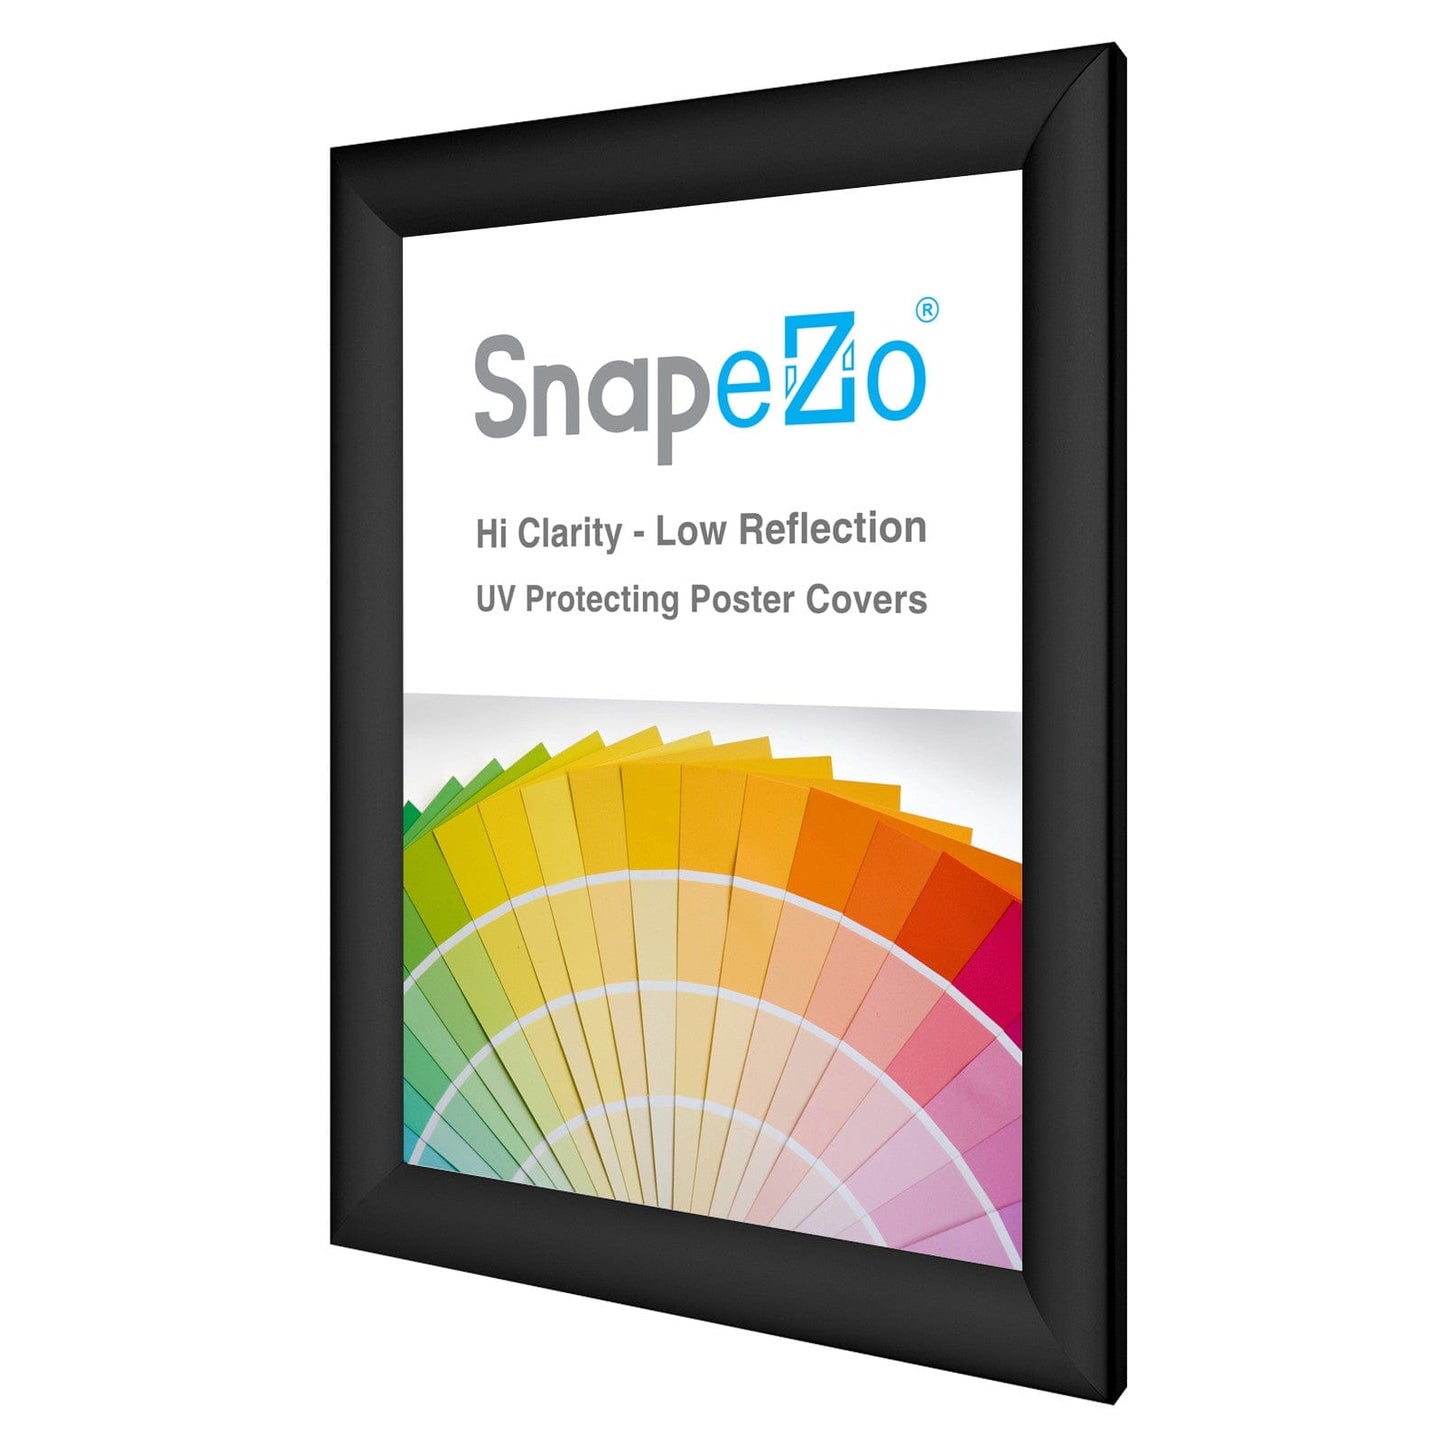 10x14 Black SnapeZo® Snap Frame - 1.2" Profile - Snap Frames Direct